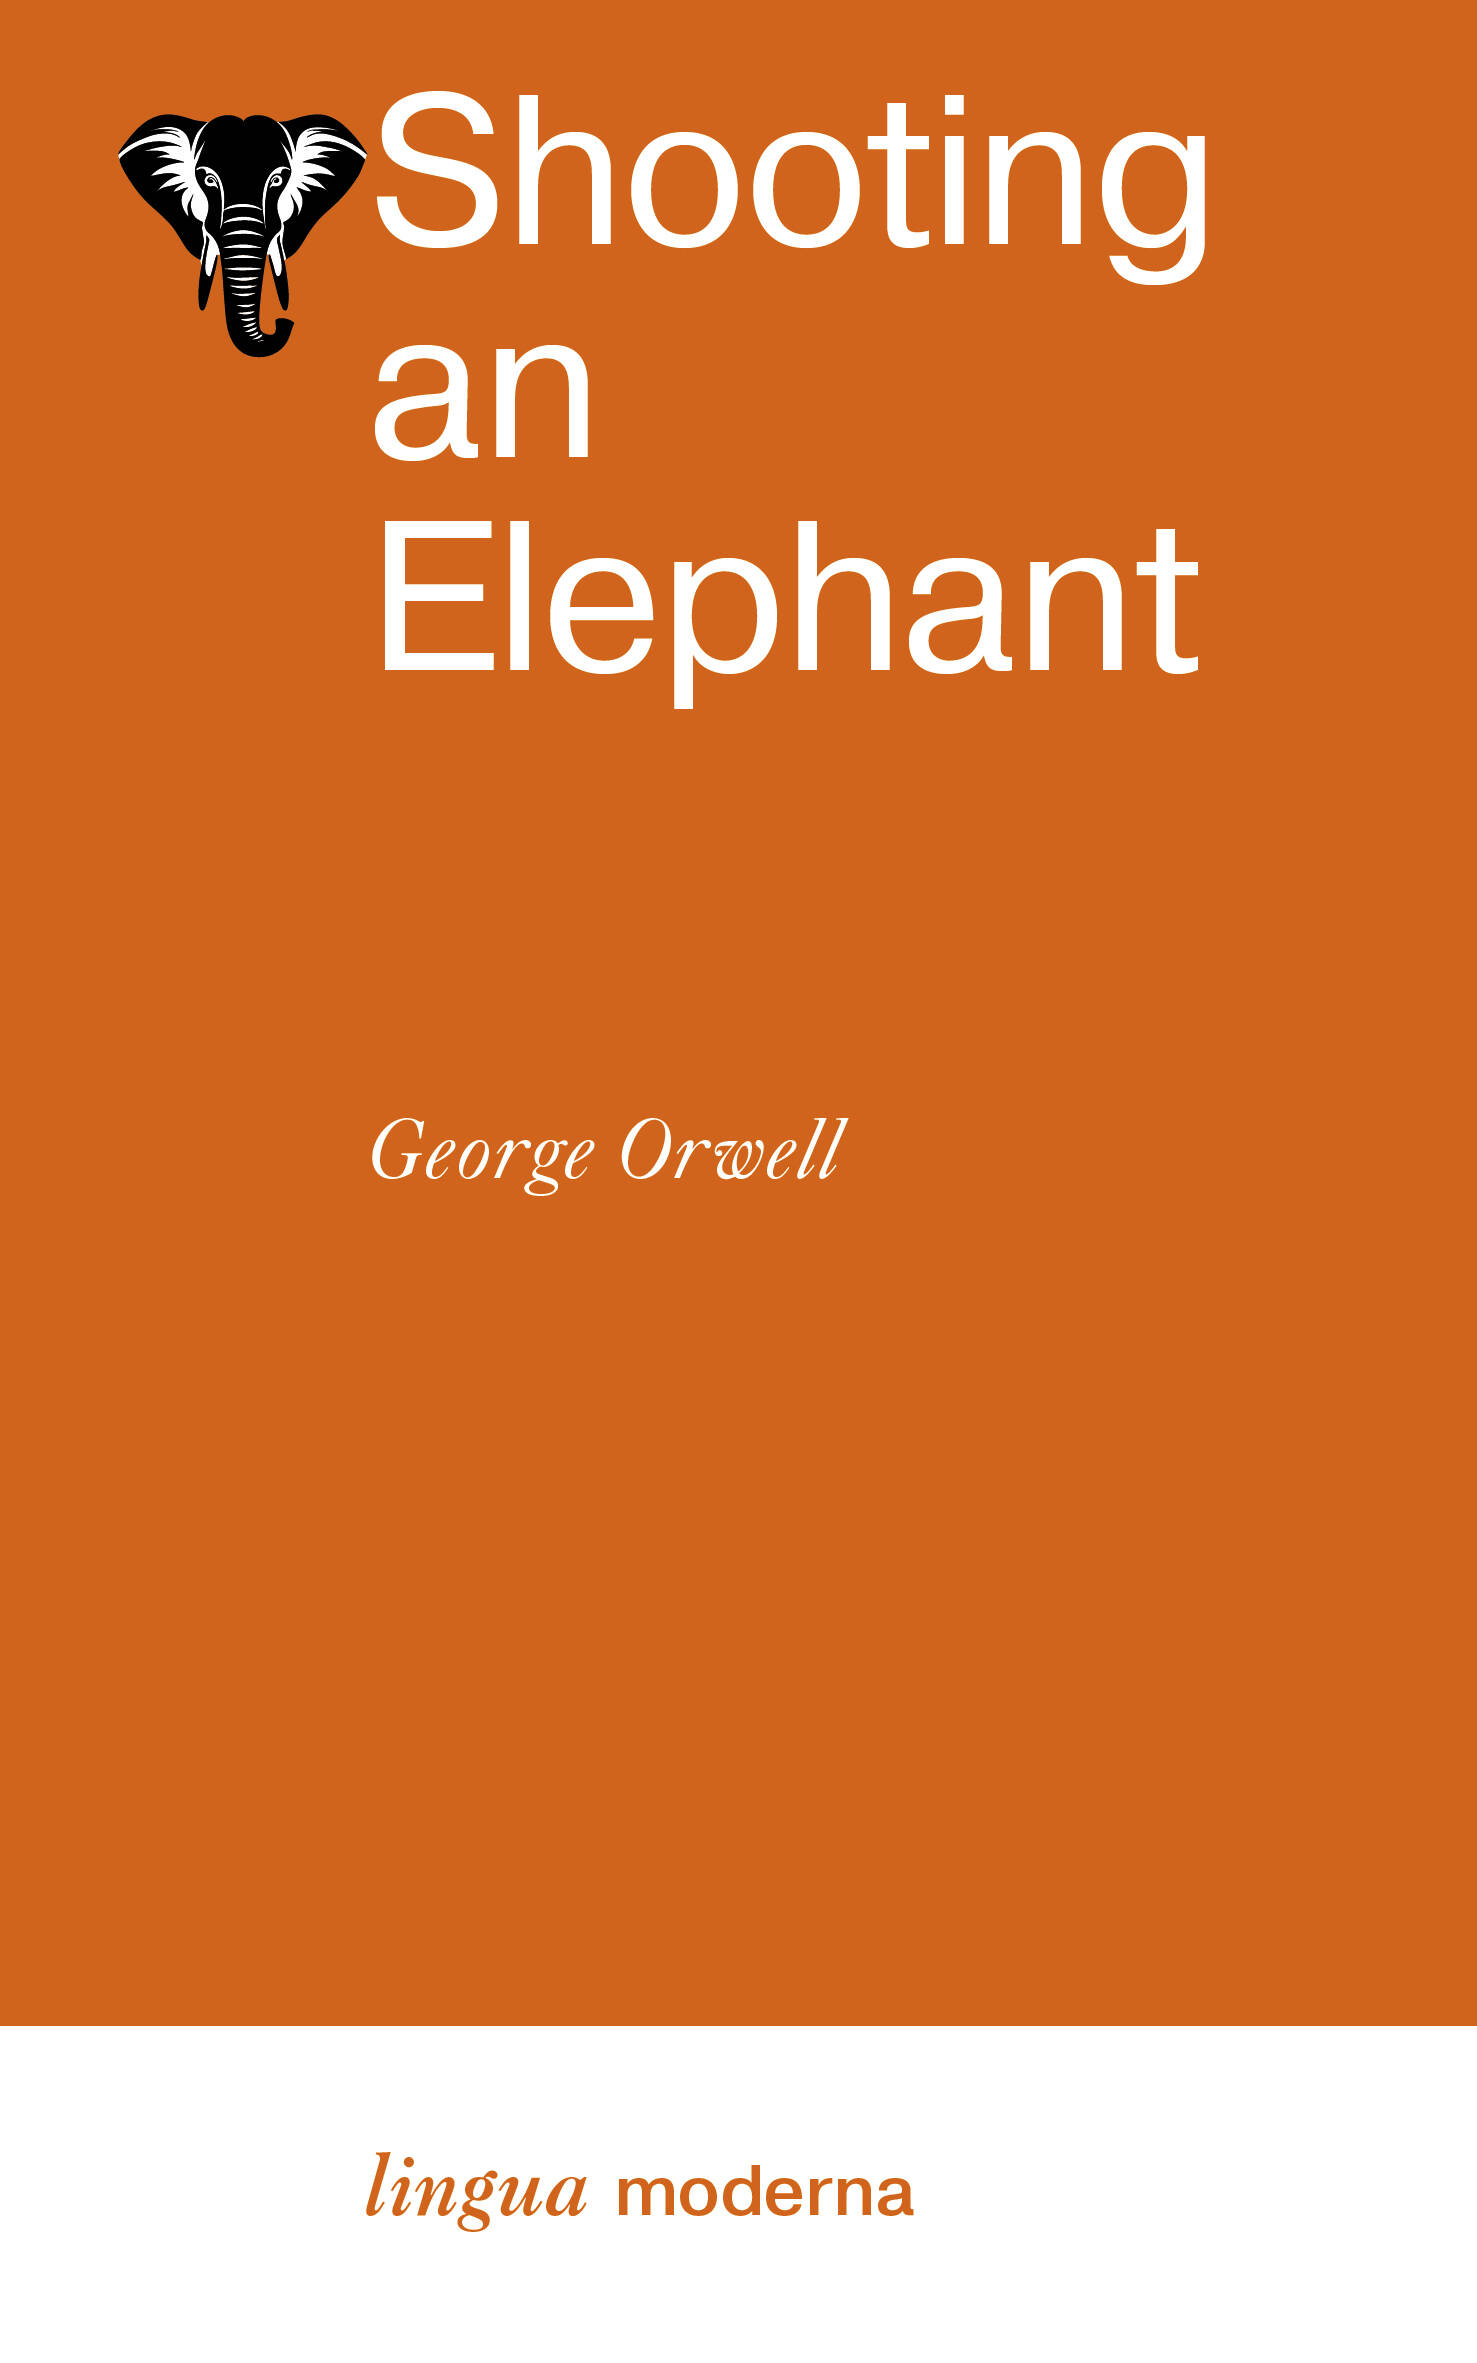 swift graham making an elephant Shooting an Elephant